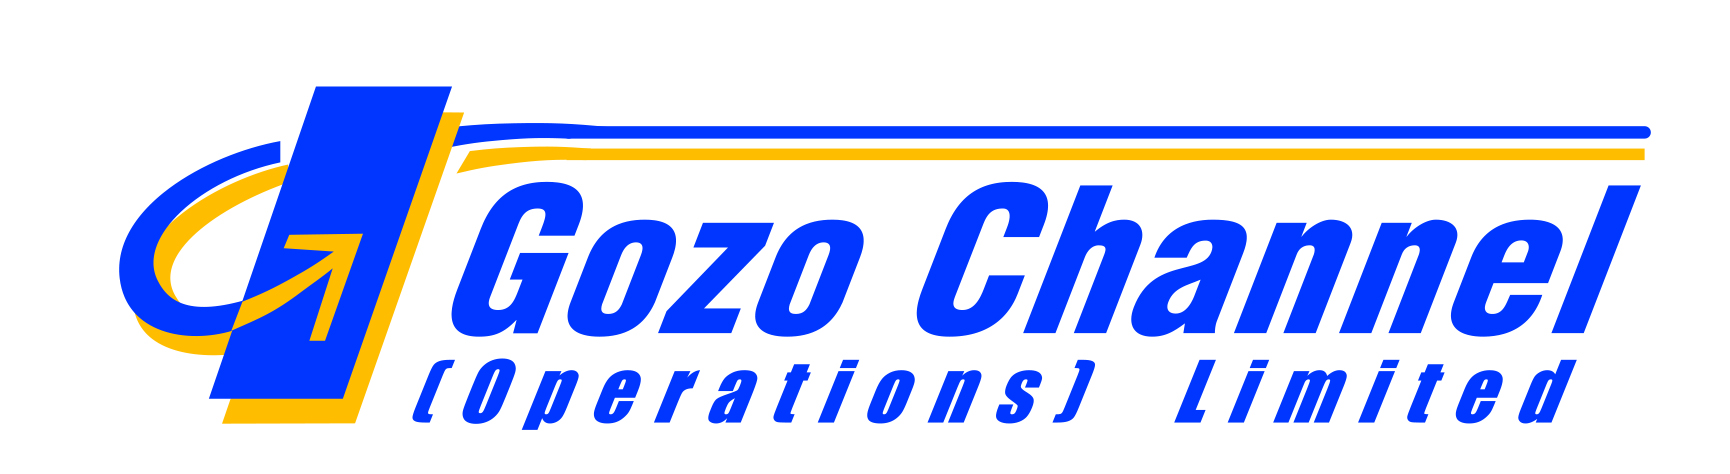 Gozo Channel